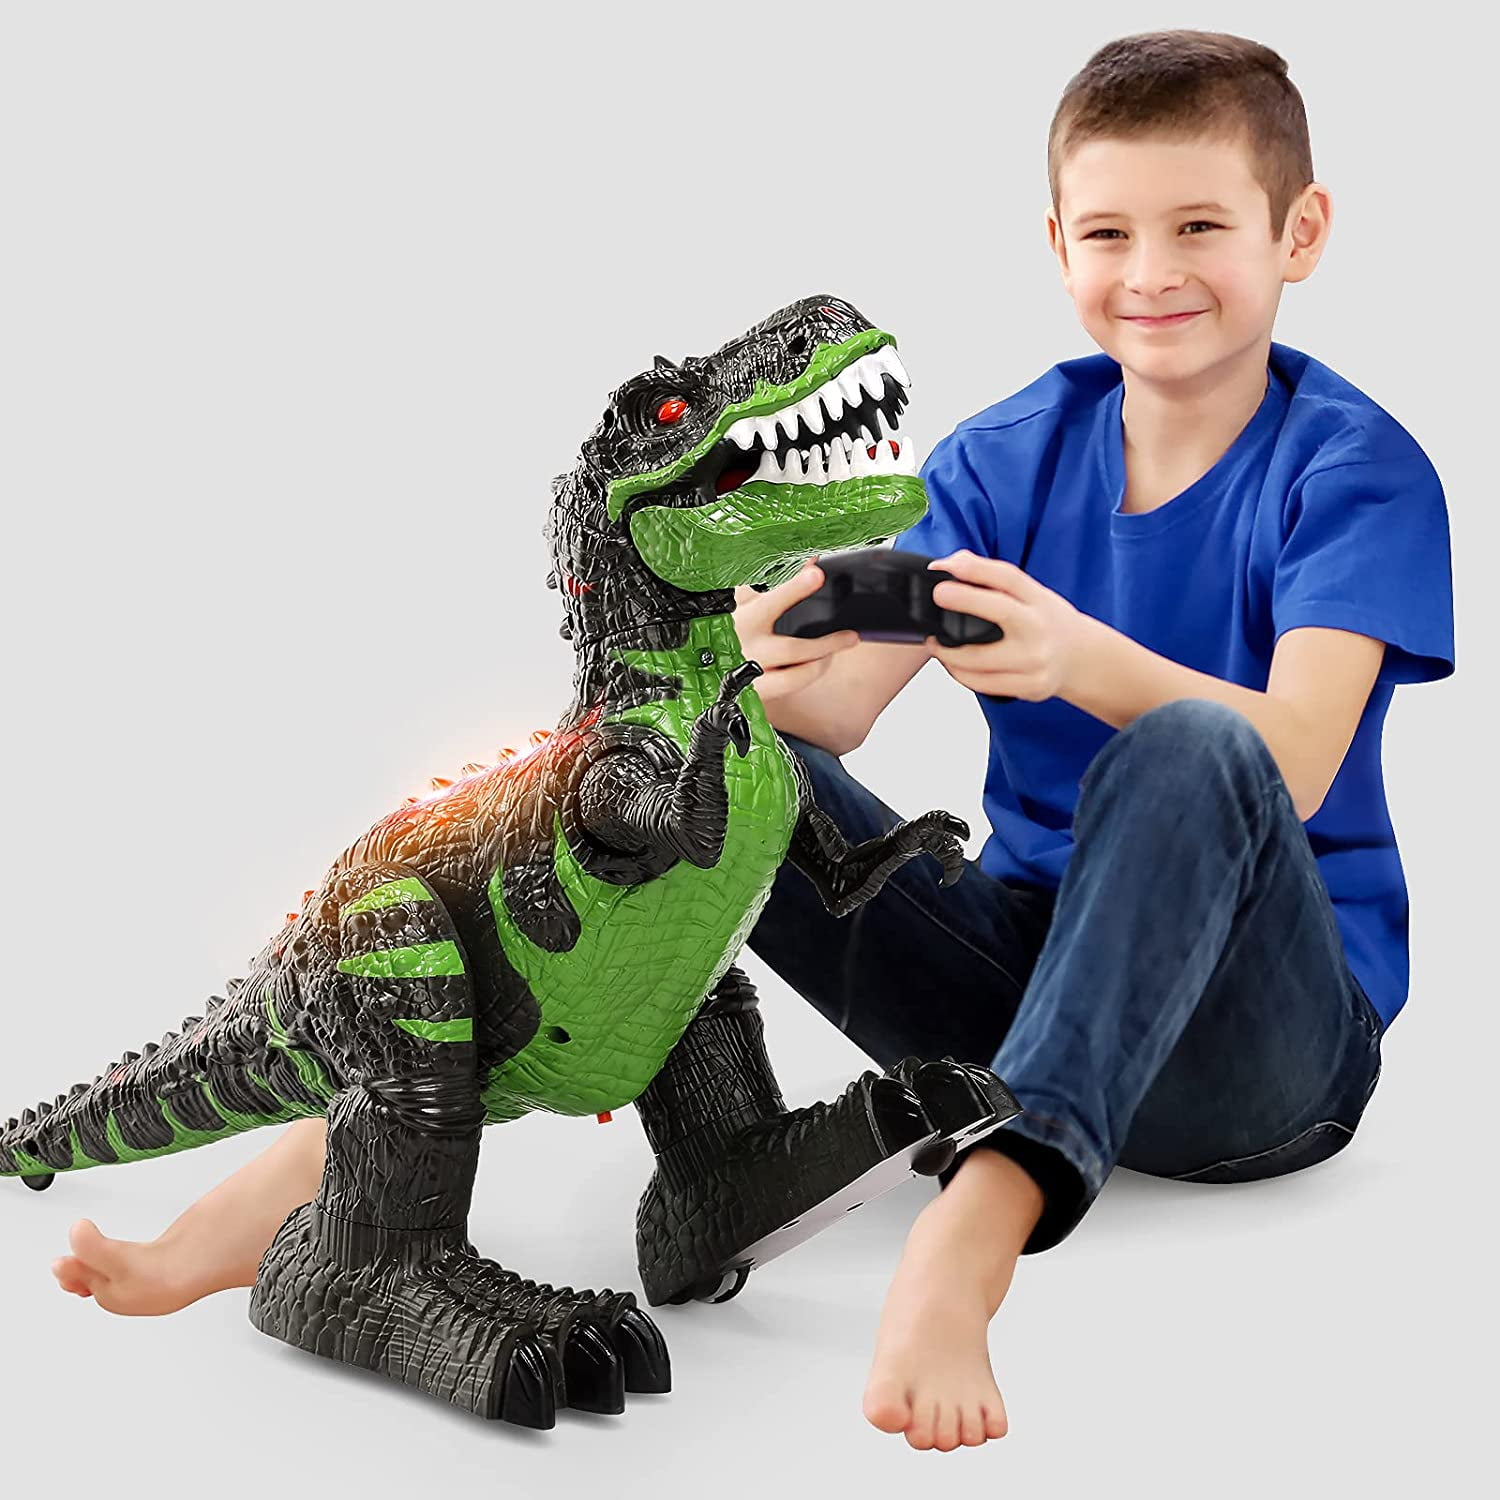 Interactive Electronic Details about    Intellisaur Remote Control Dinosaur Robot for Kids 